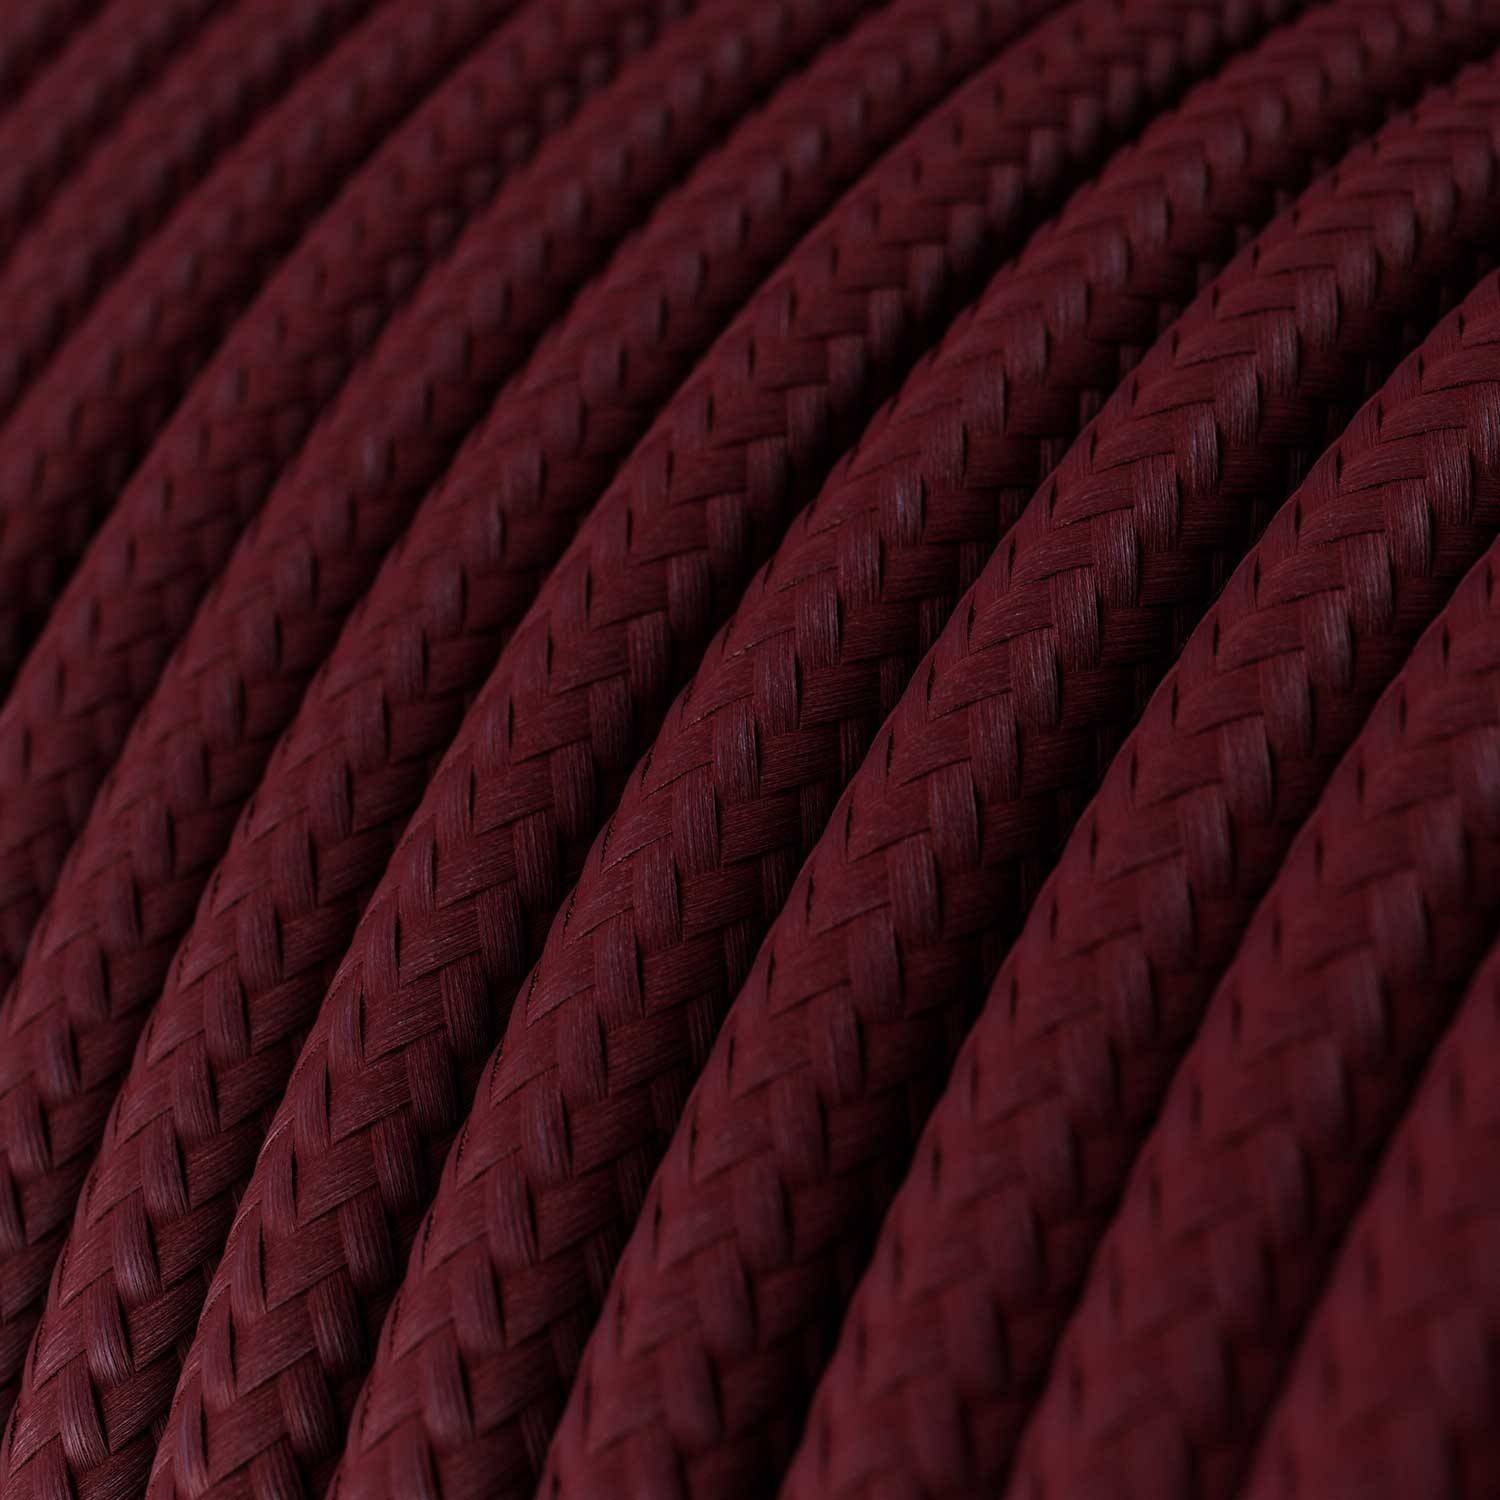 Cabo elétrico redondo com seda artificial aplicada cor de tecido sólida RM19 Bordeaux